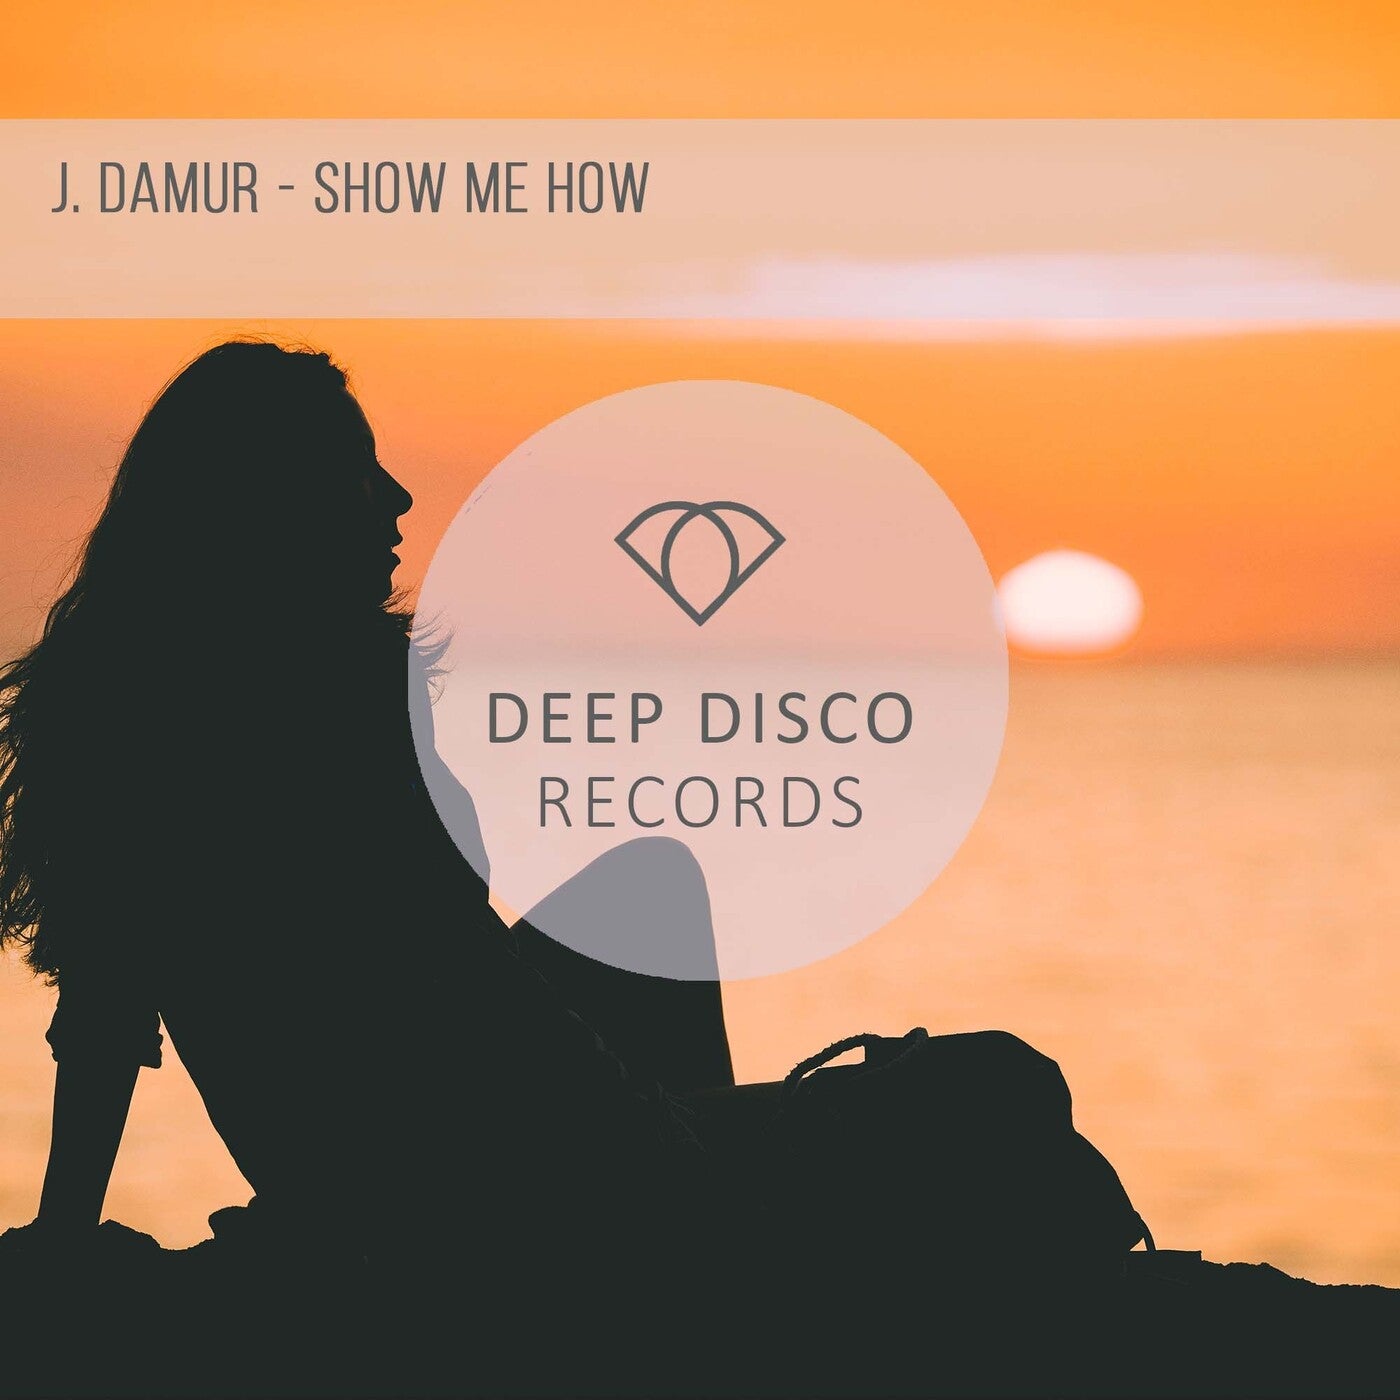 J. Damur - Show Me How (original Mix) on Revolution Radio